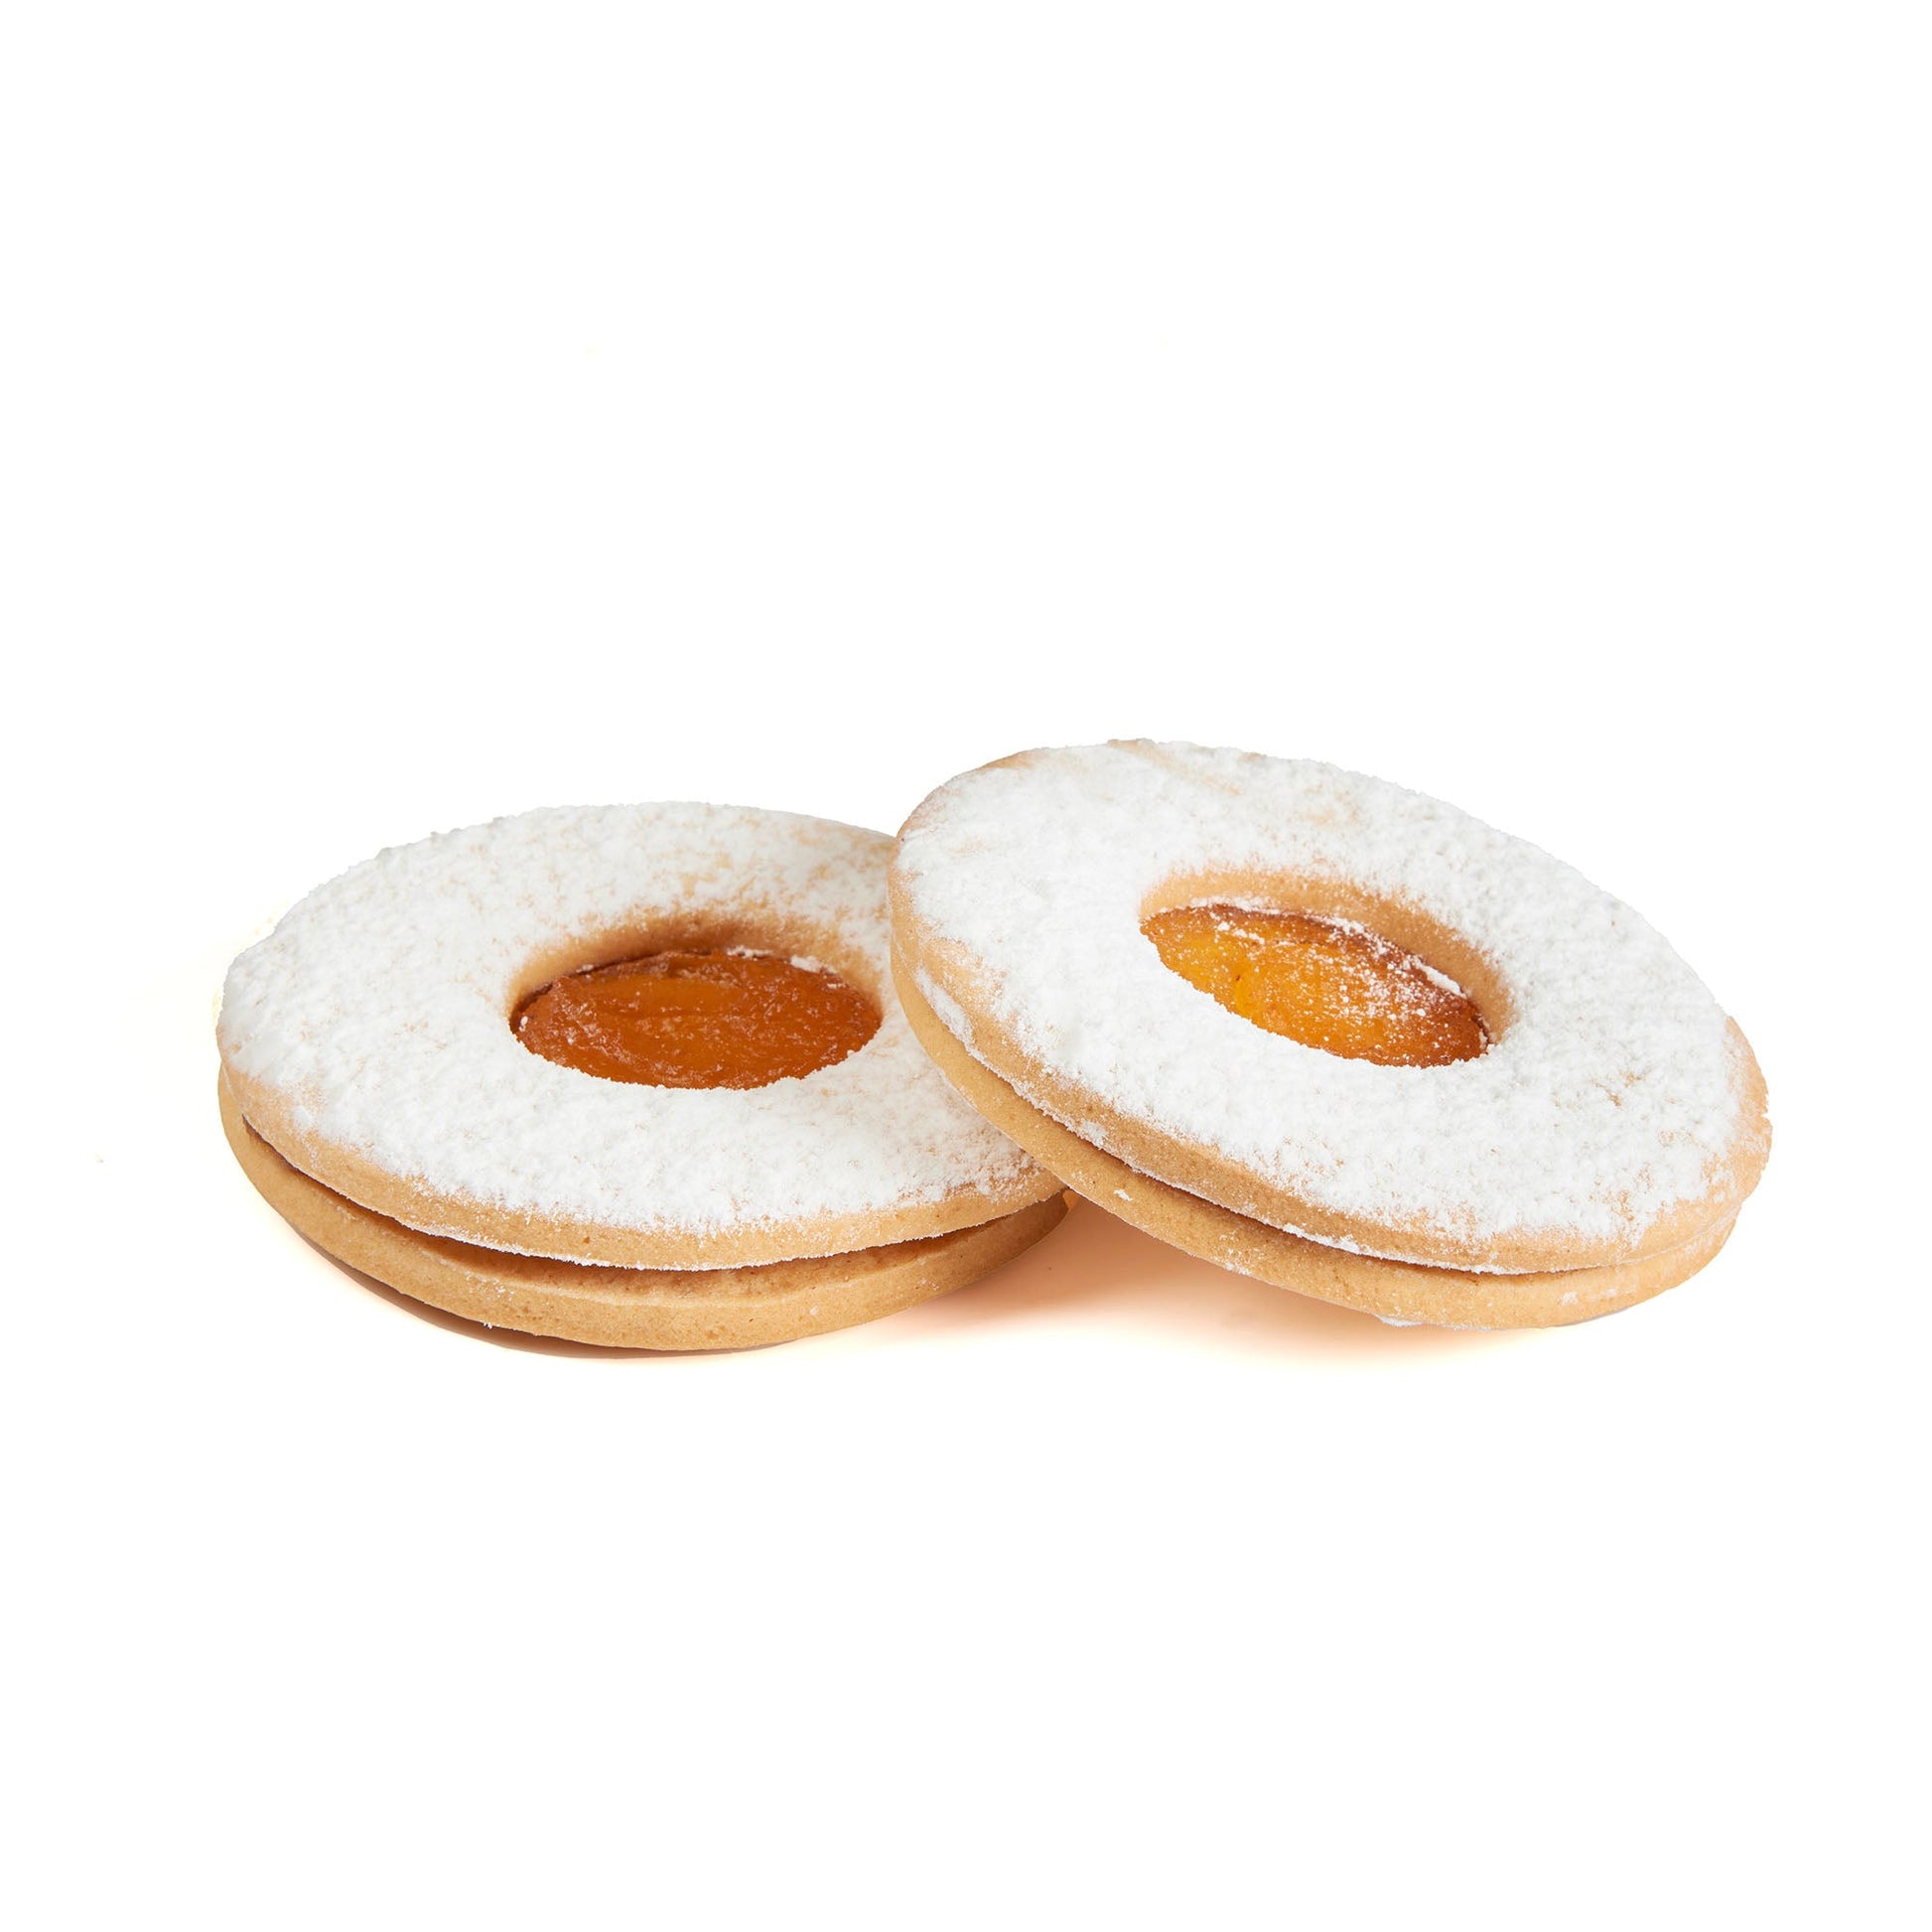 Apricot Shortbread Cookies